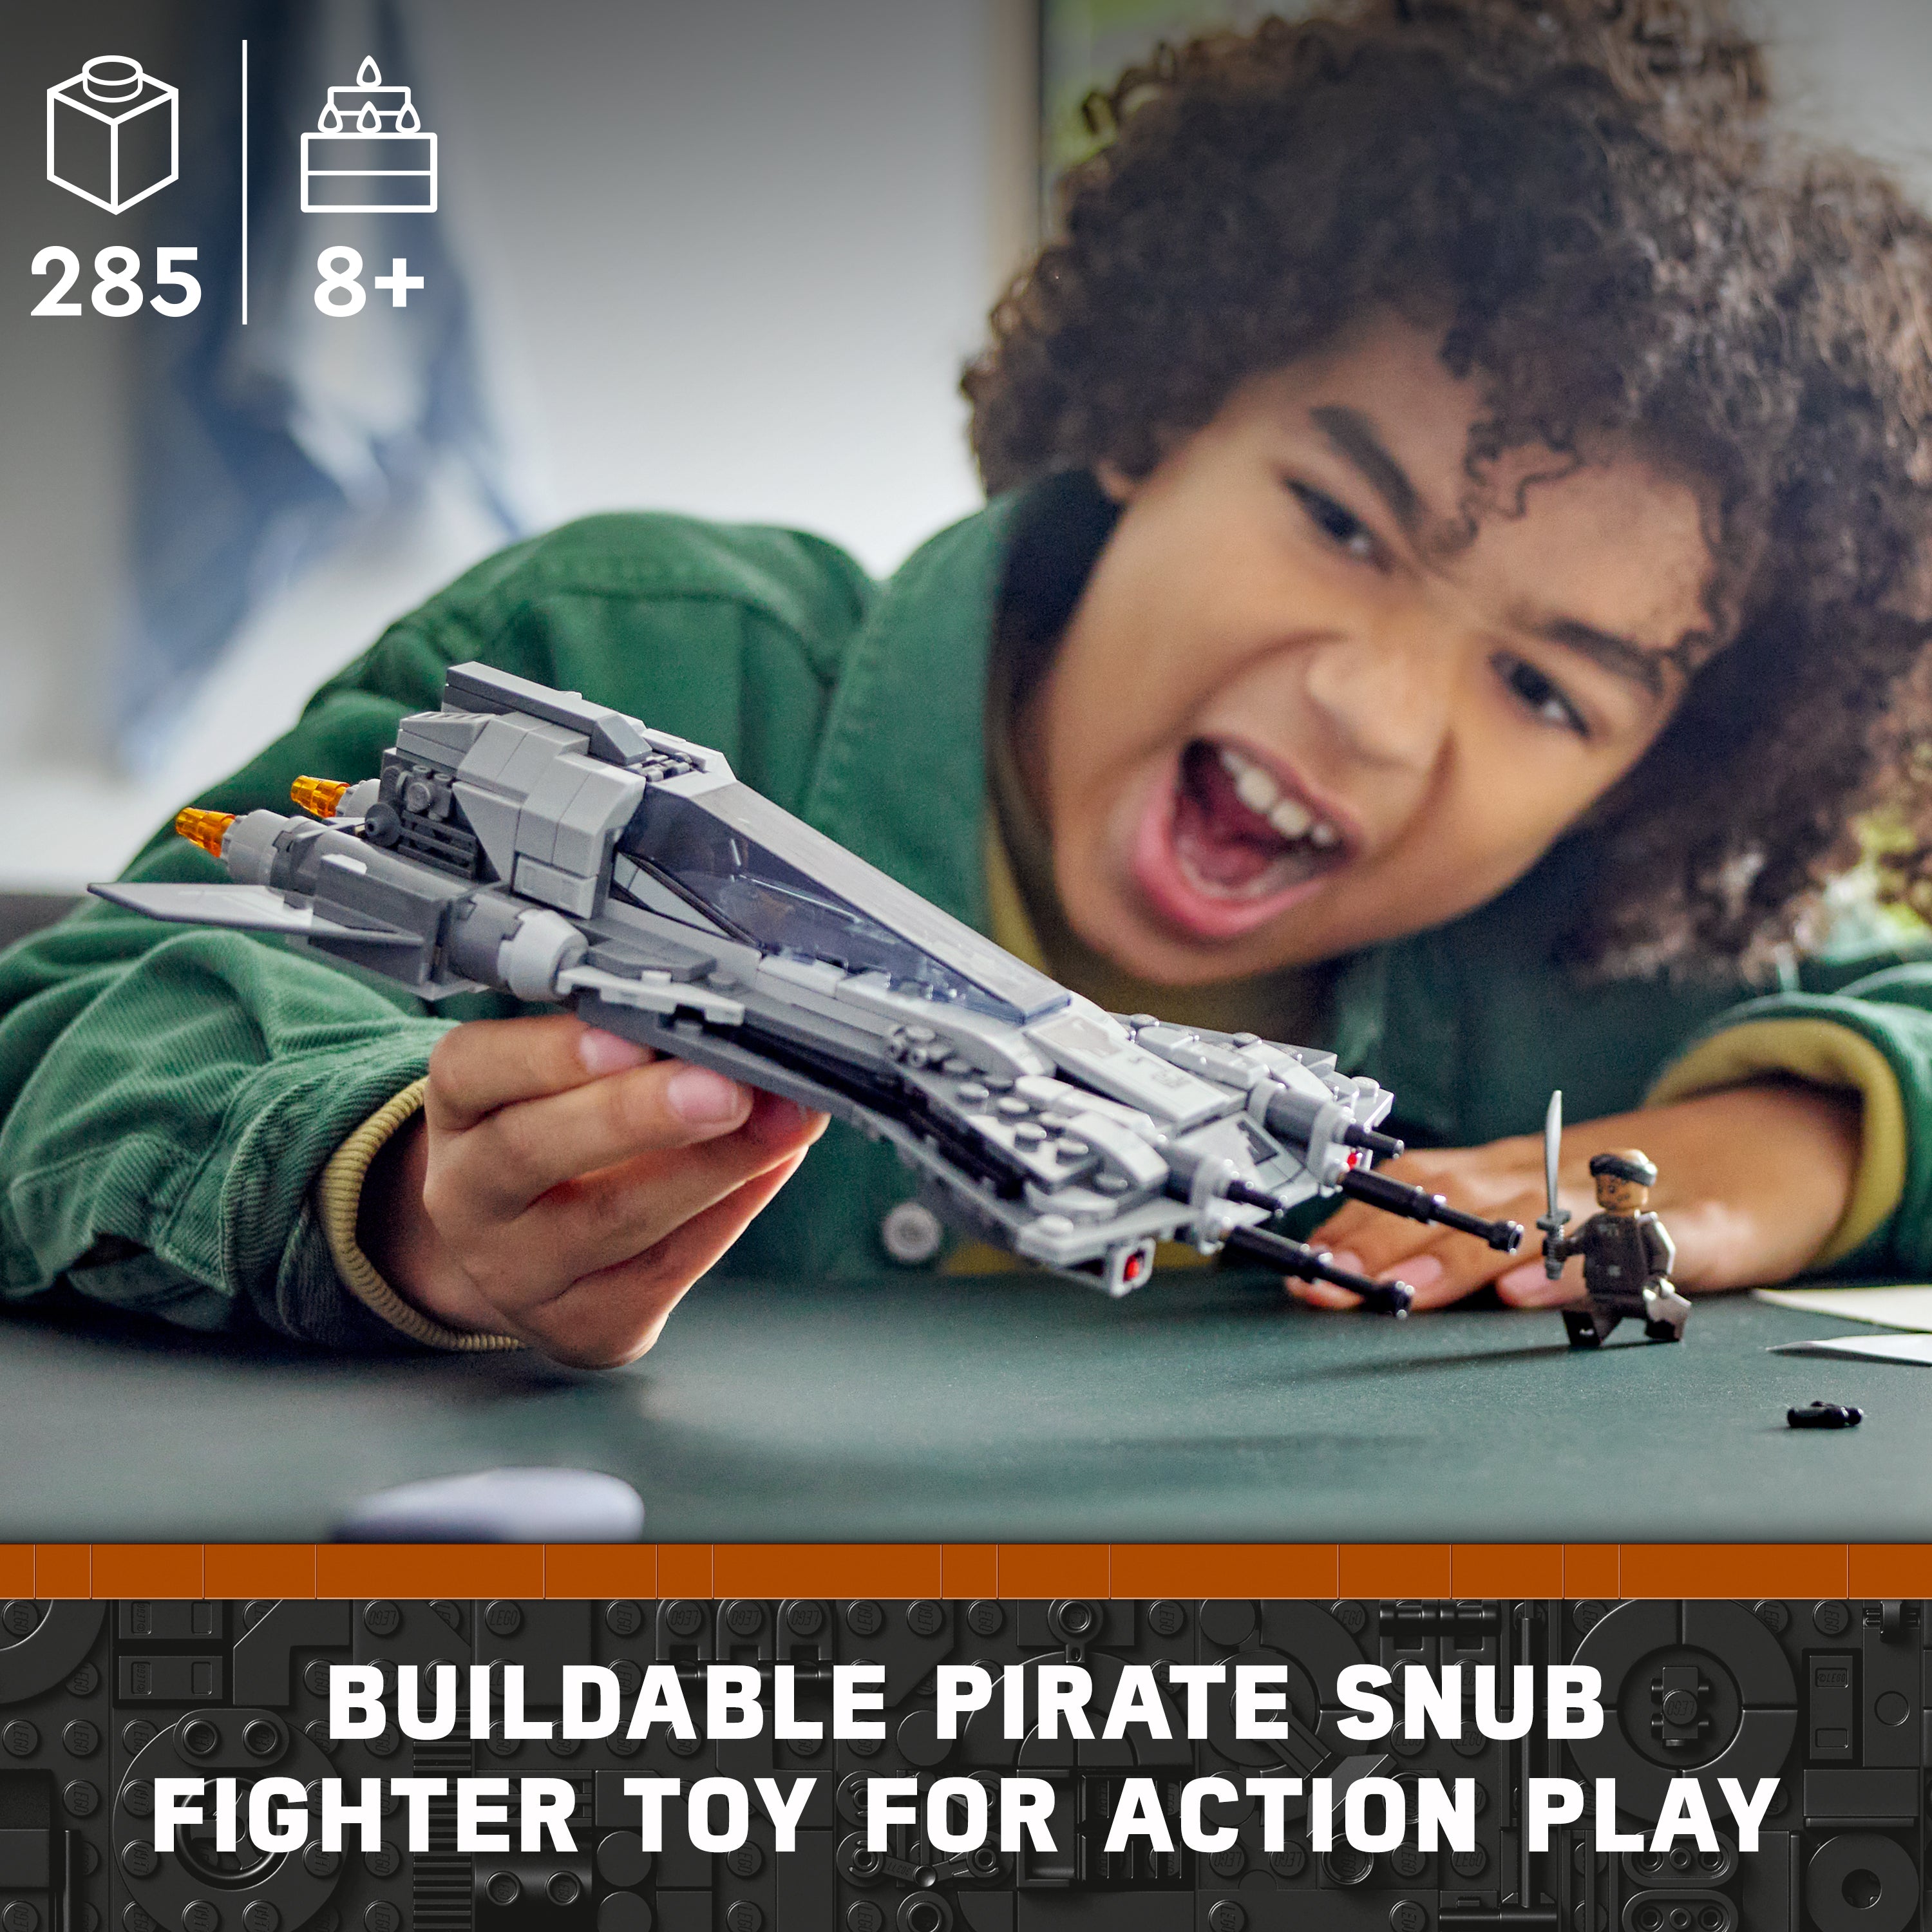 Lego 75346 Star Wars Pirate Snub Fighter